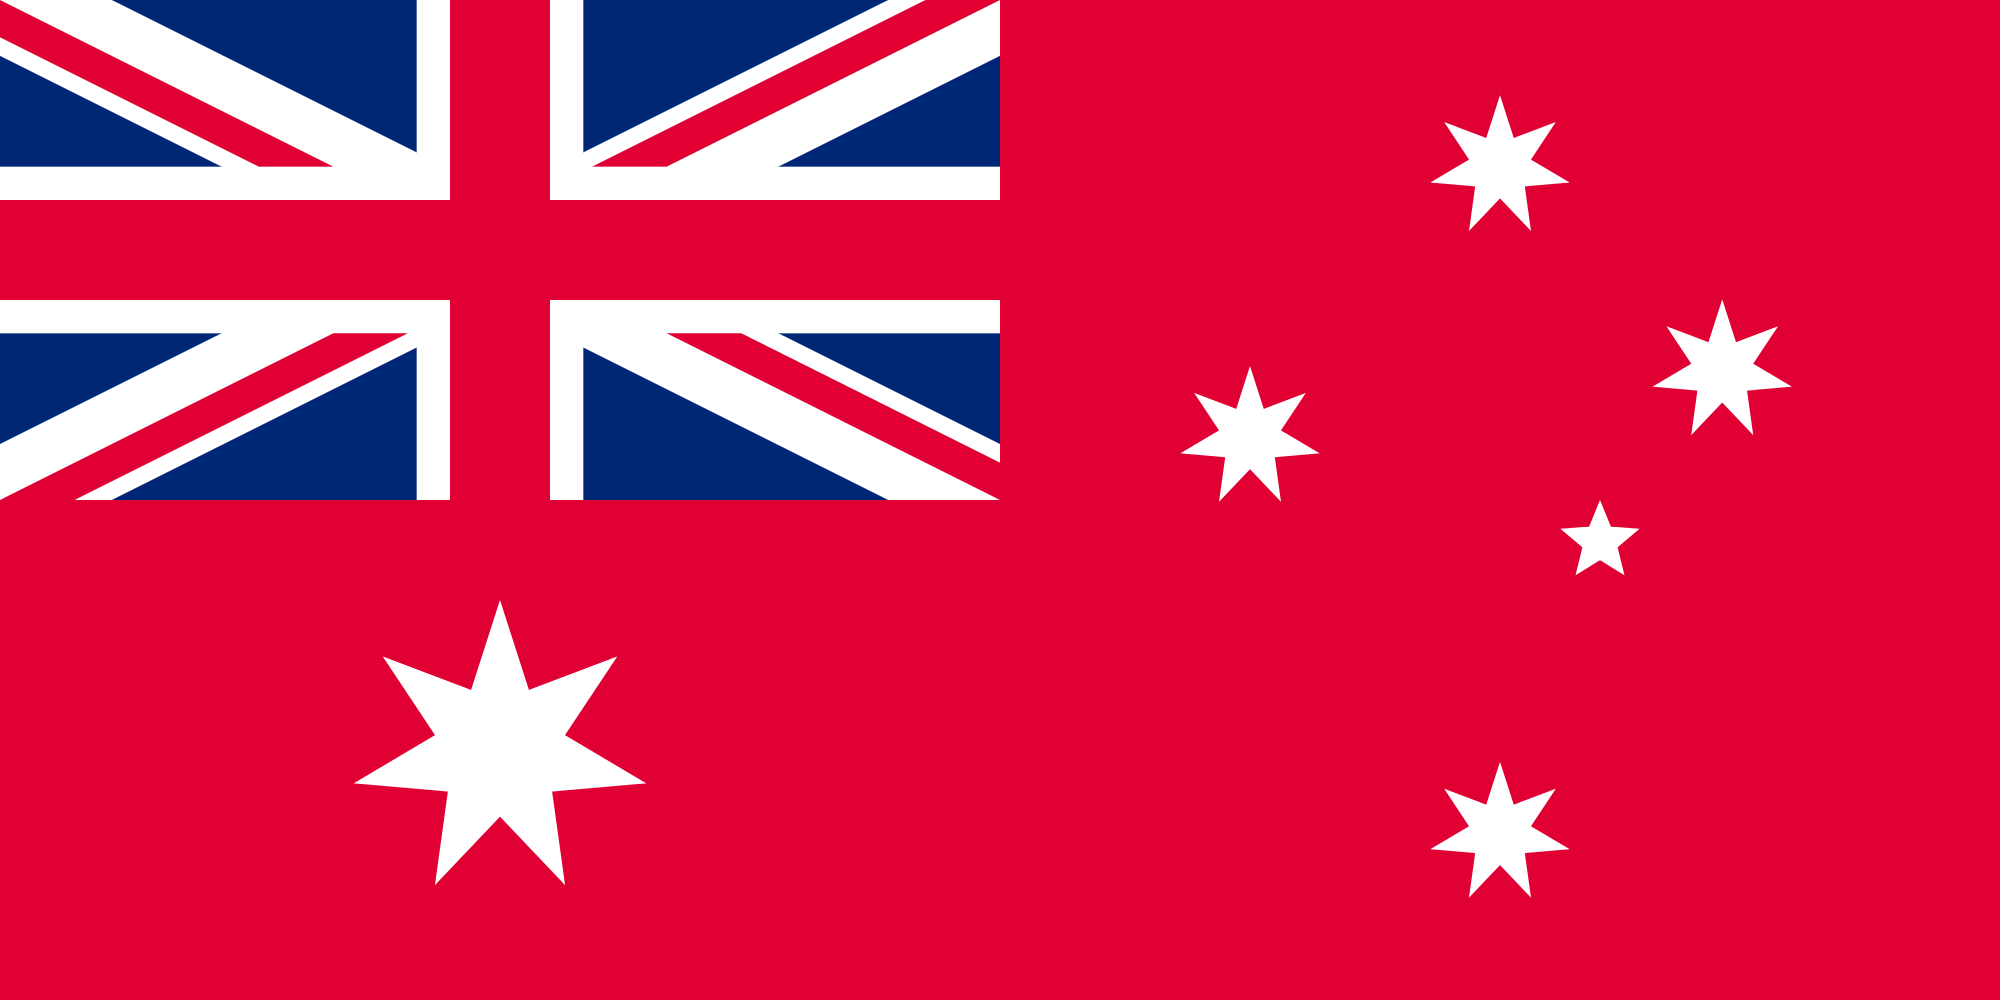 Australia (Red Ensign)